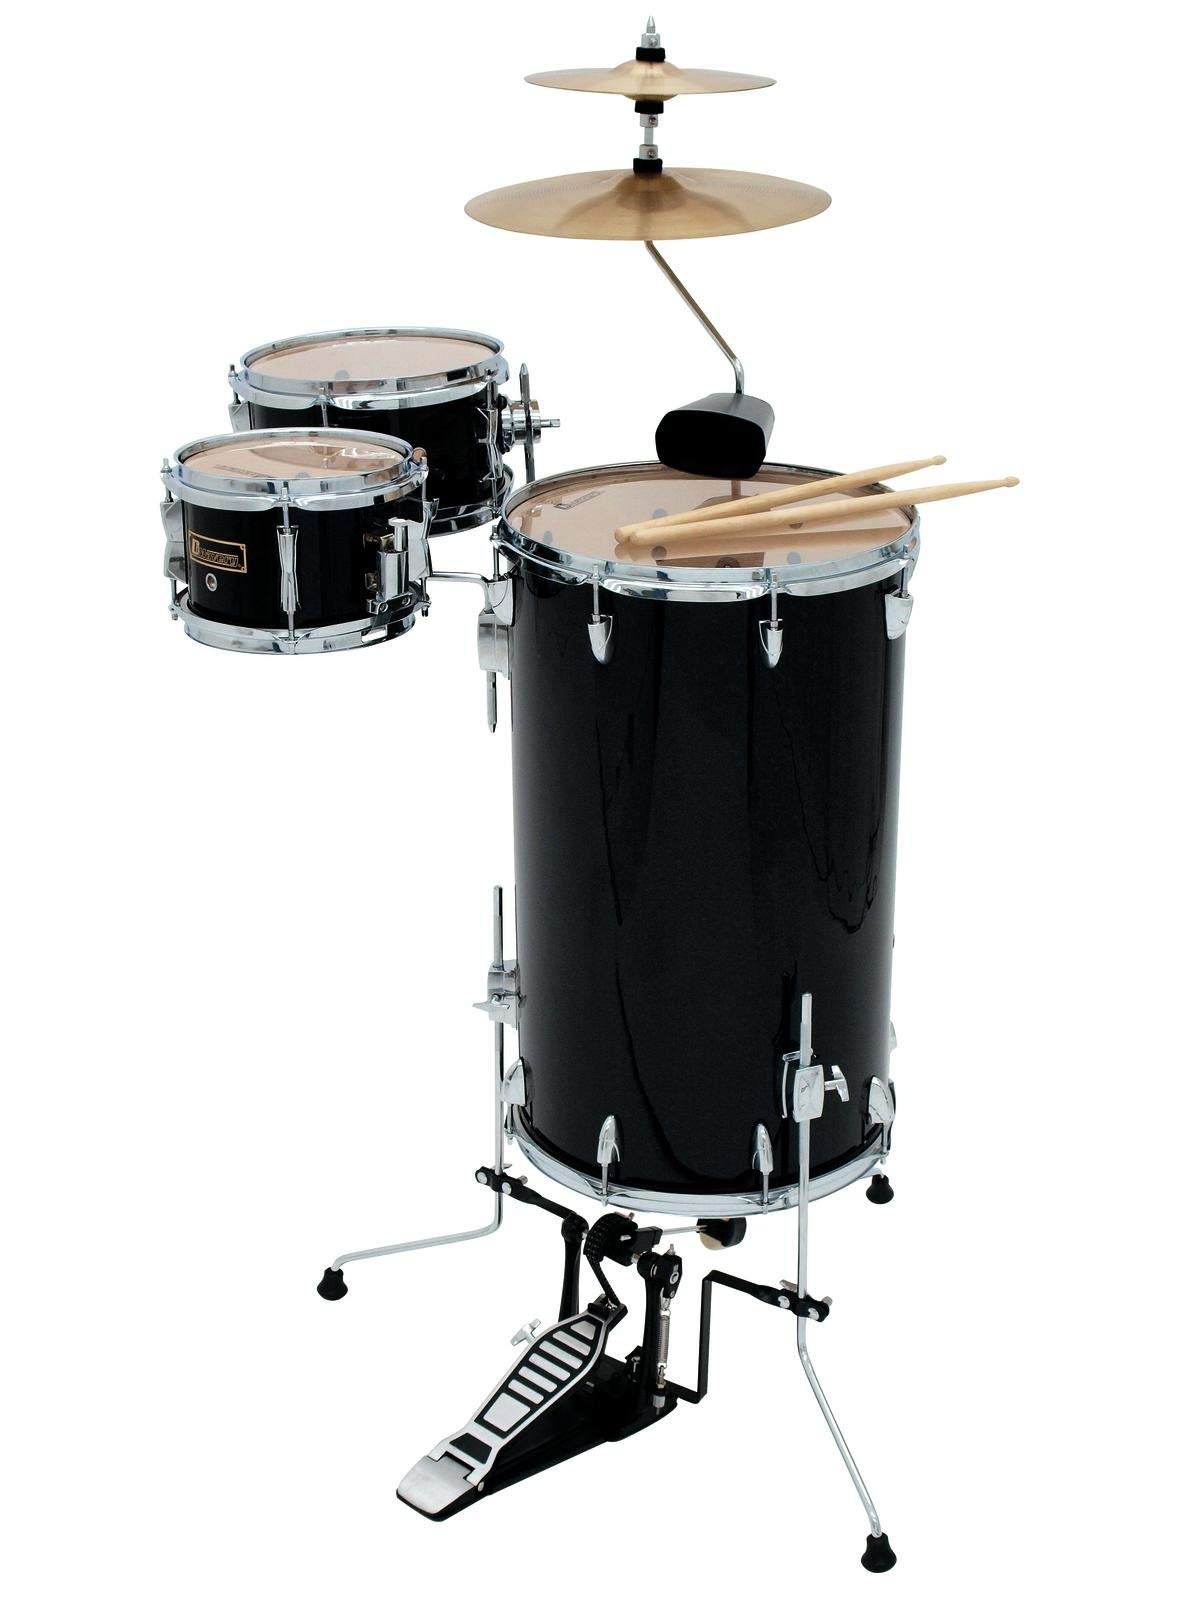 Dimavery CDS Cocktail Schlagzeug, schwarz | 5-teiliges Cocktail Schlagzeug Set, ideal für kleine Bühnen